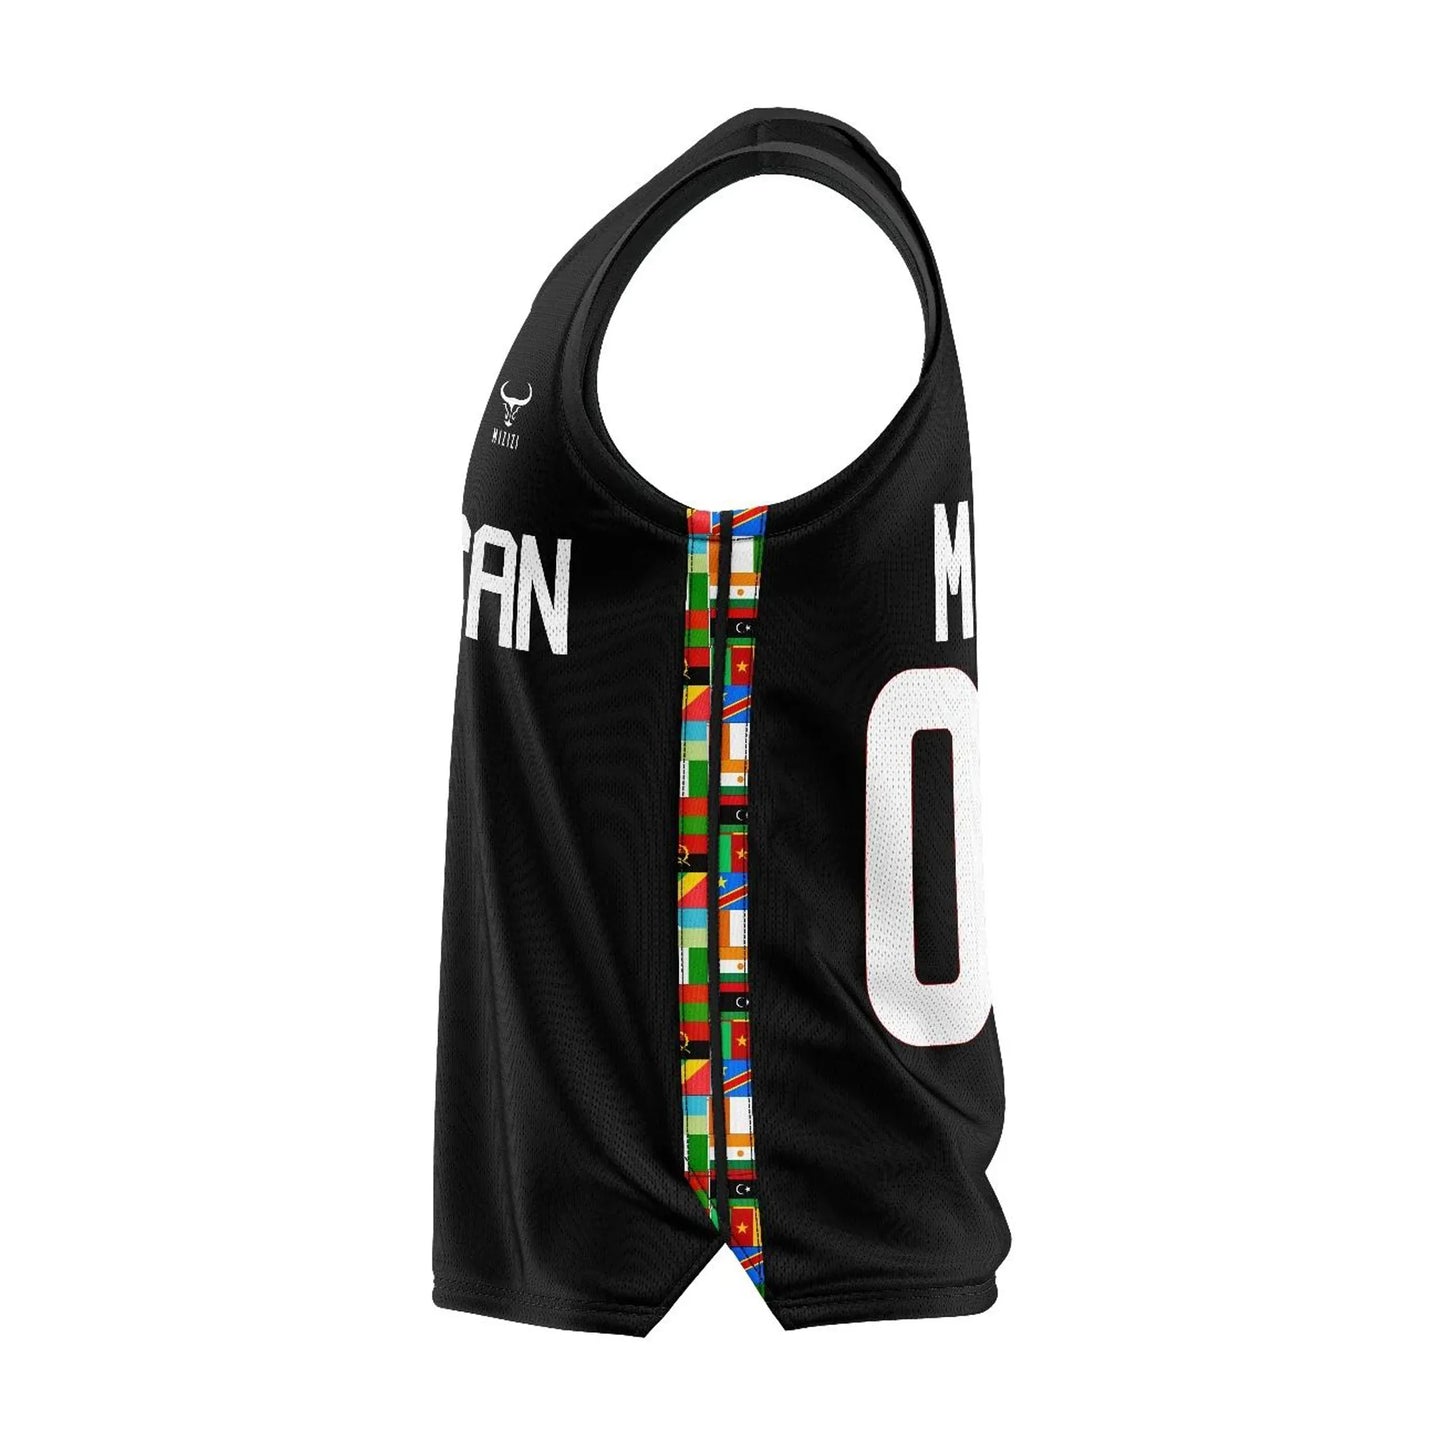 Basketball Uniform Maker Philippines & Basketball Jersey Uniform Creator